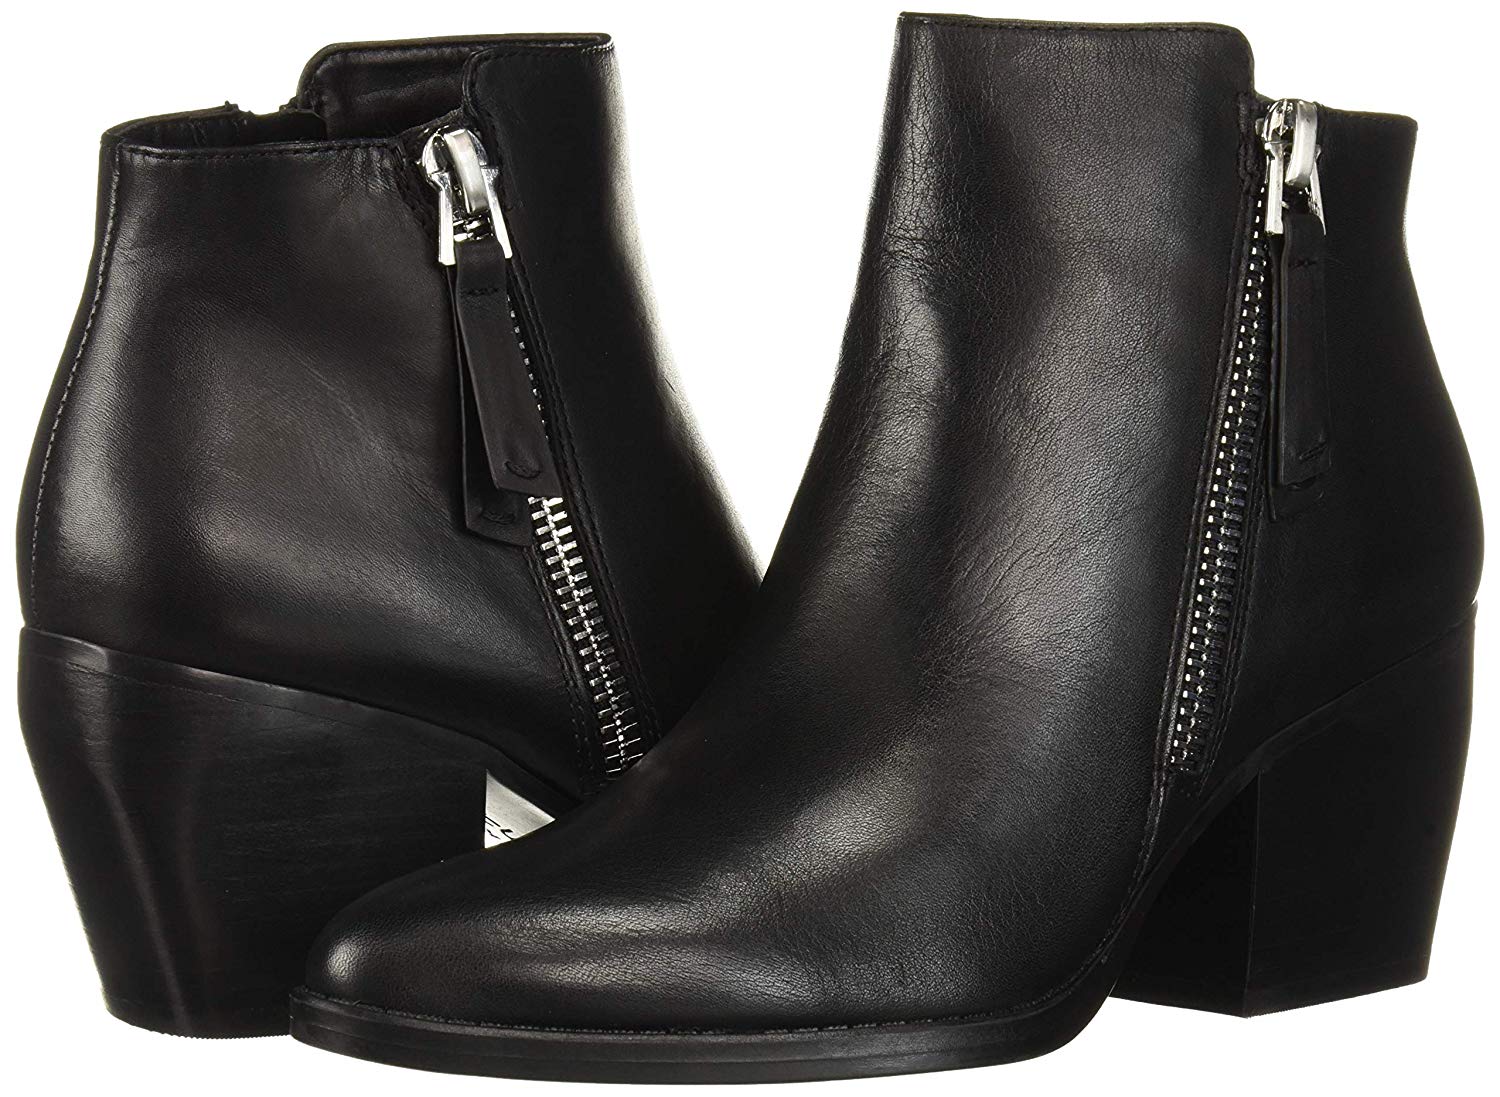 Naturalizer Women's Freya Ankle Boot, Black Leather, Size 6.0 odjG